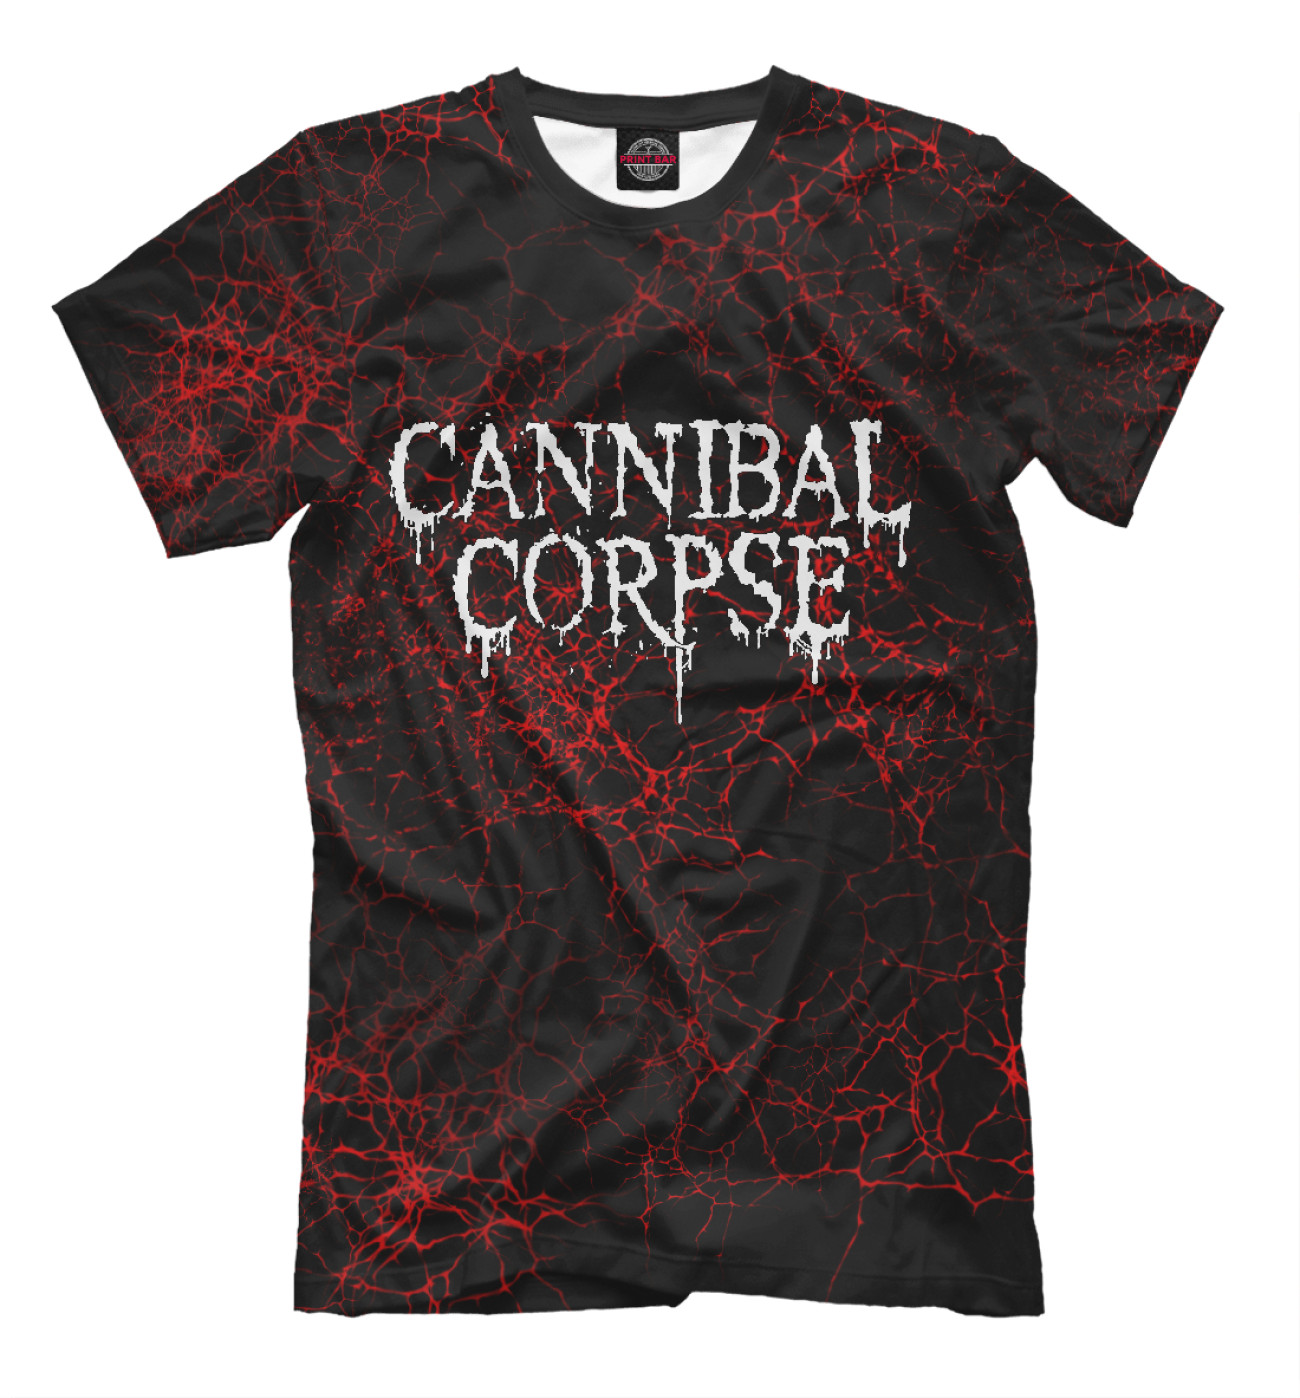 Мужская Футболка Cannibal Corpse, артикул: CCR-924378-fut-2